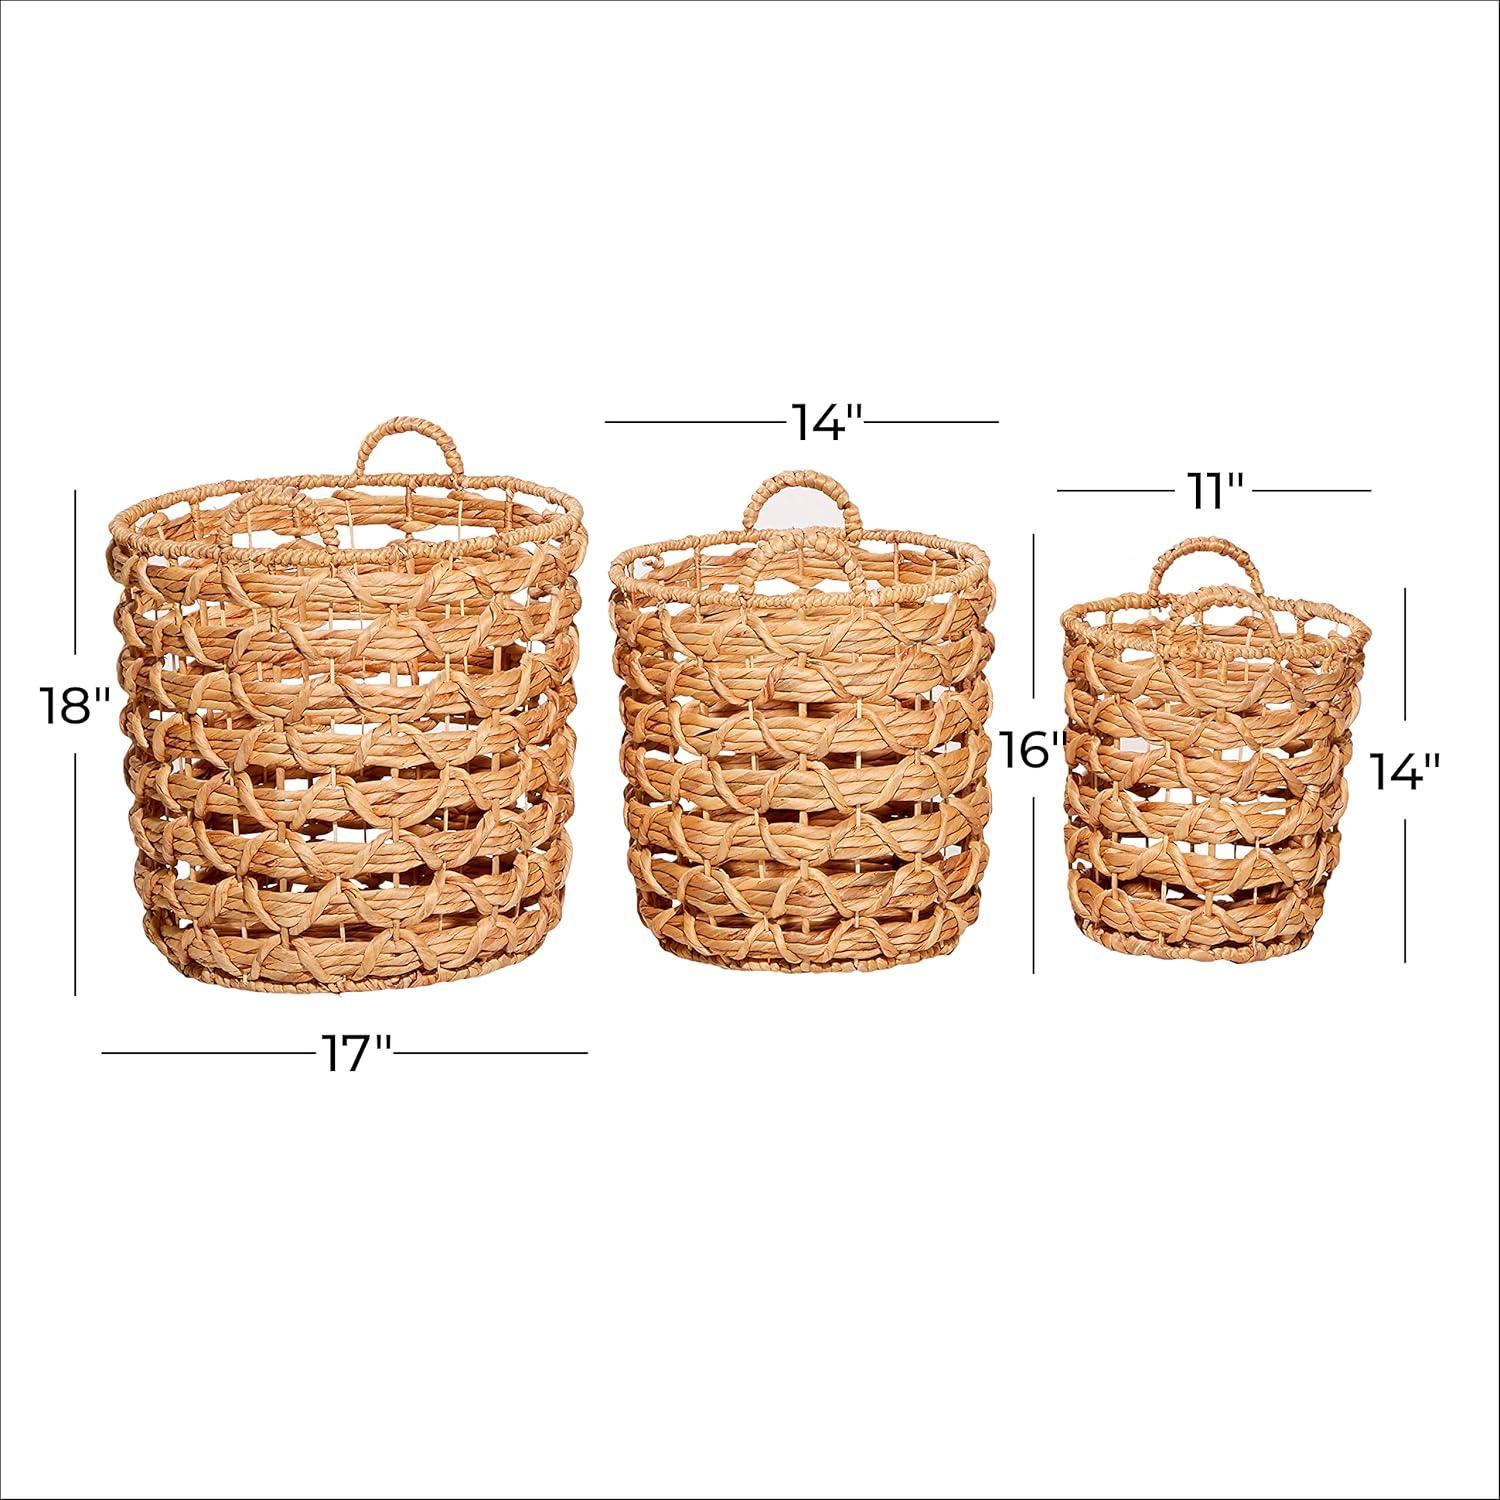 Coastal Seagrass Round Storage Baskets, Set of 3 - Tawny Brown